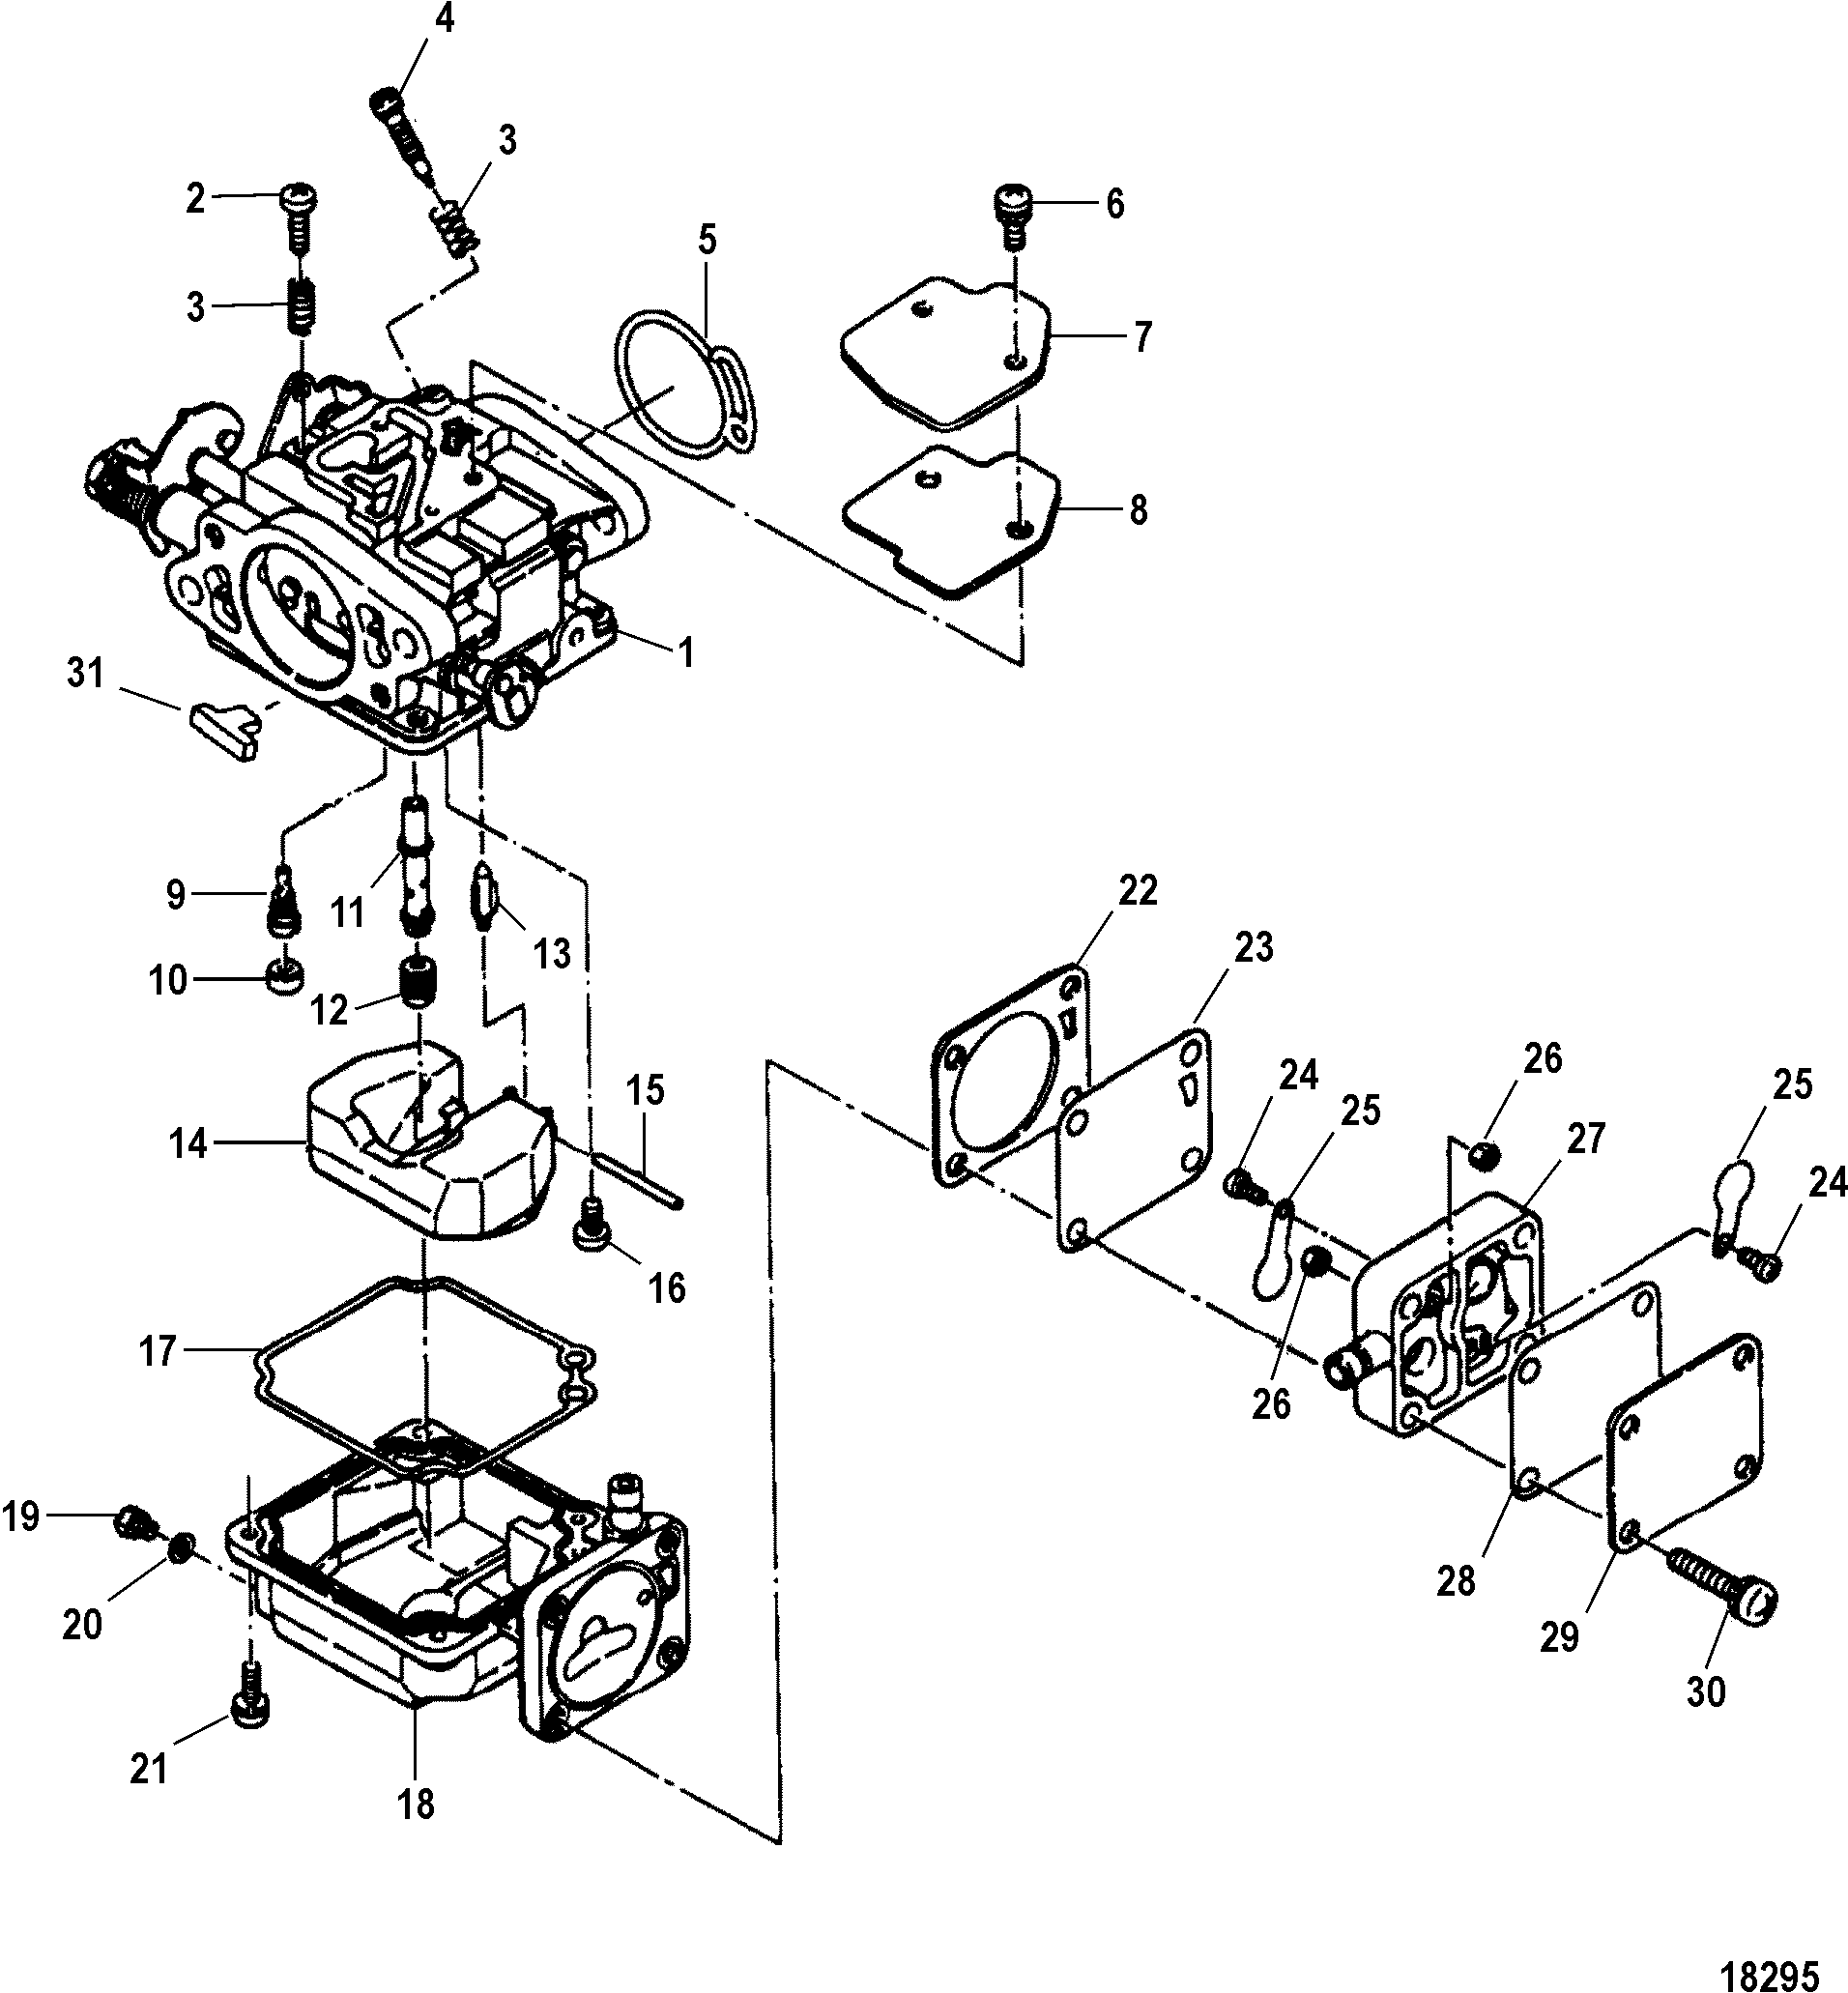 printable wiring diagram for mercury 9.9 engine # ot635760